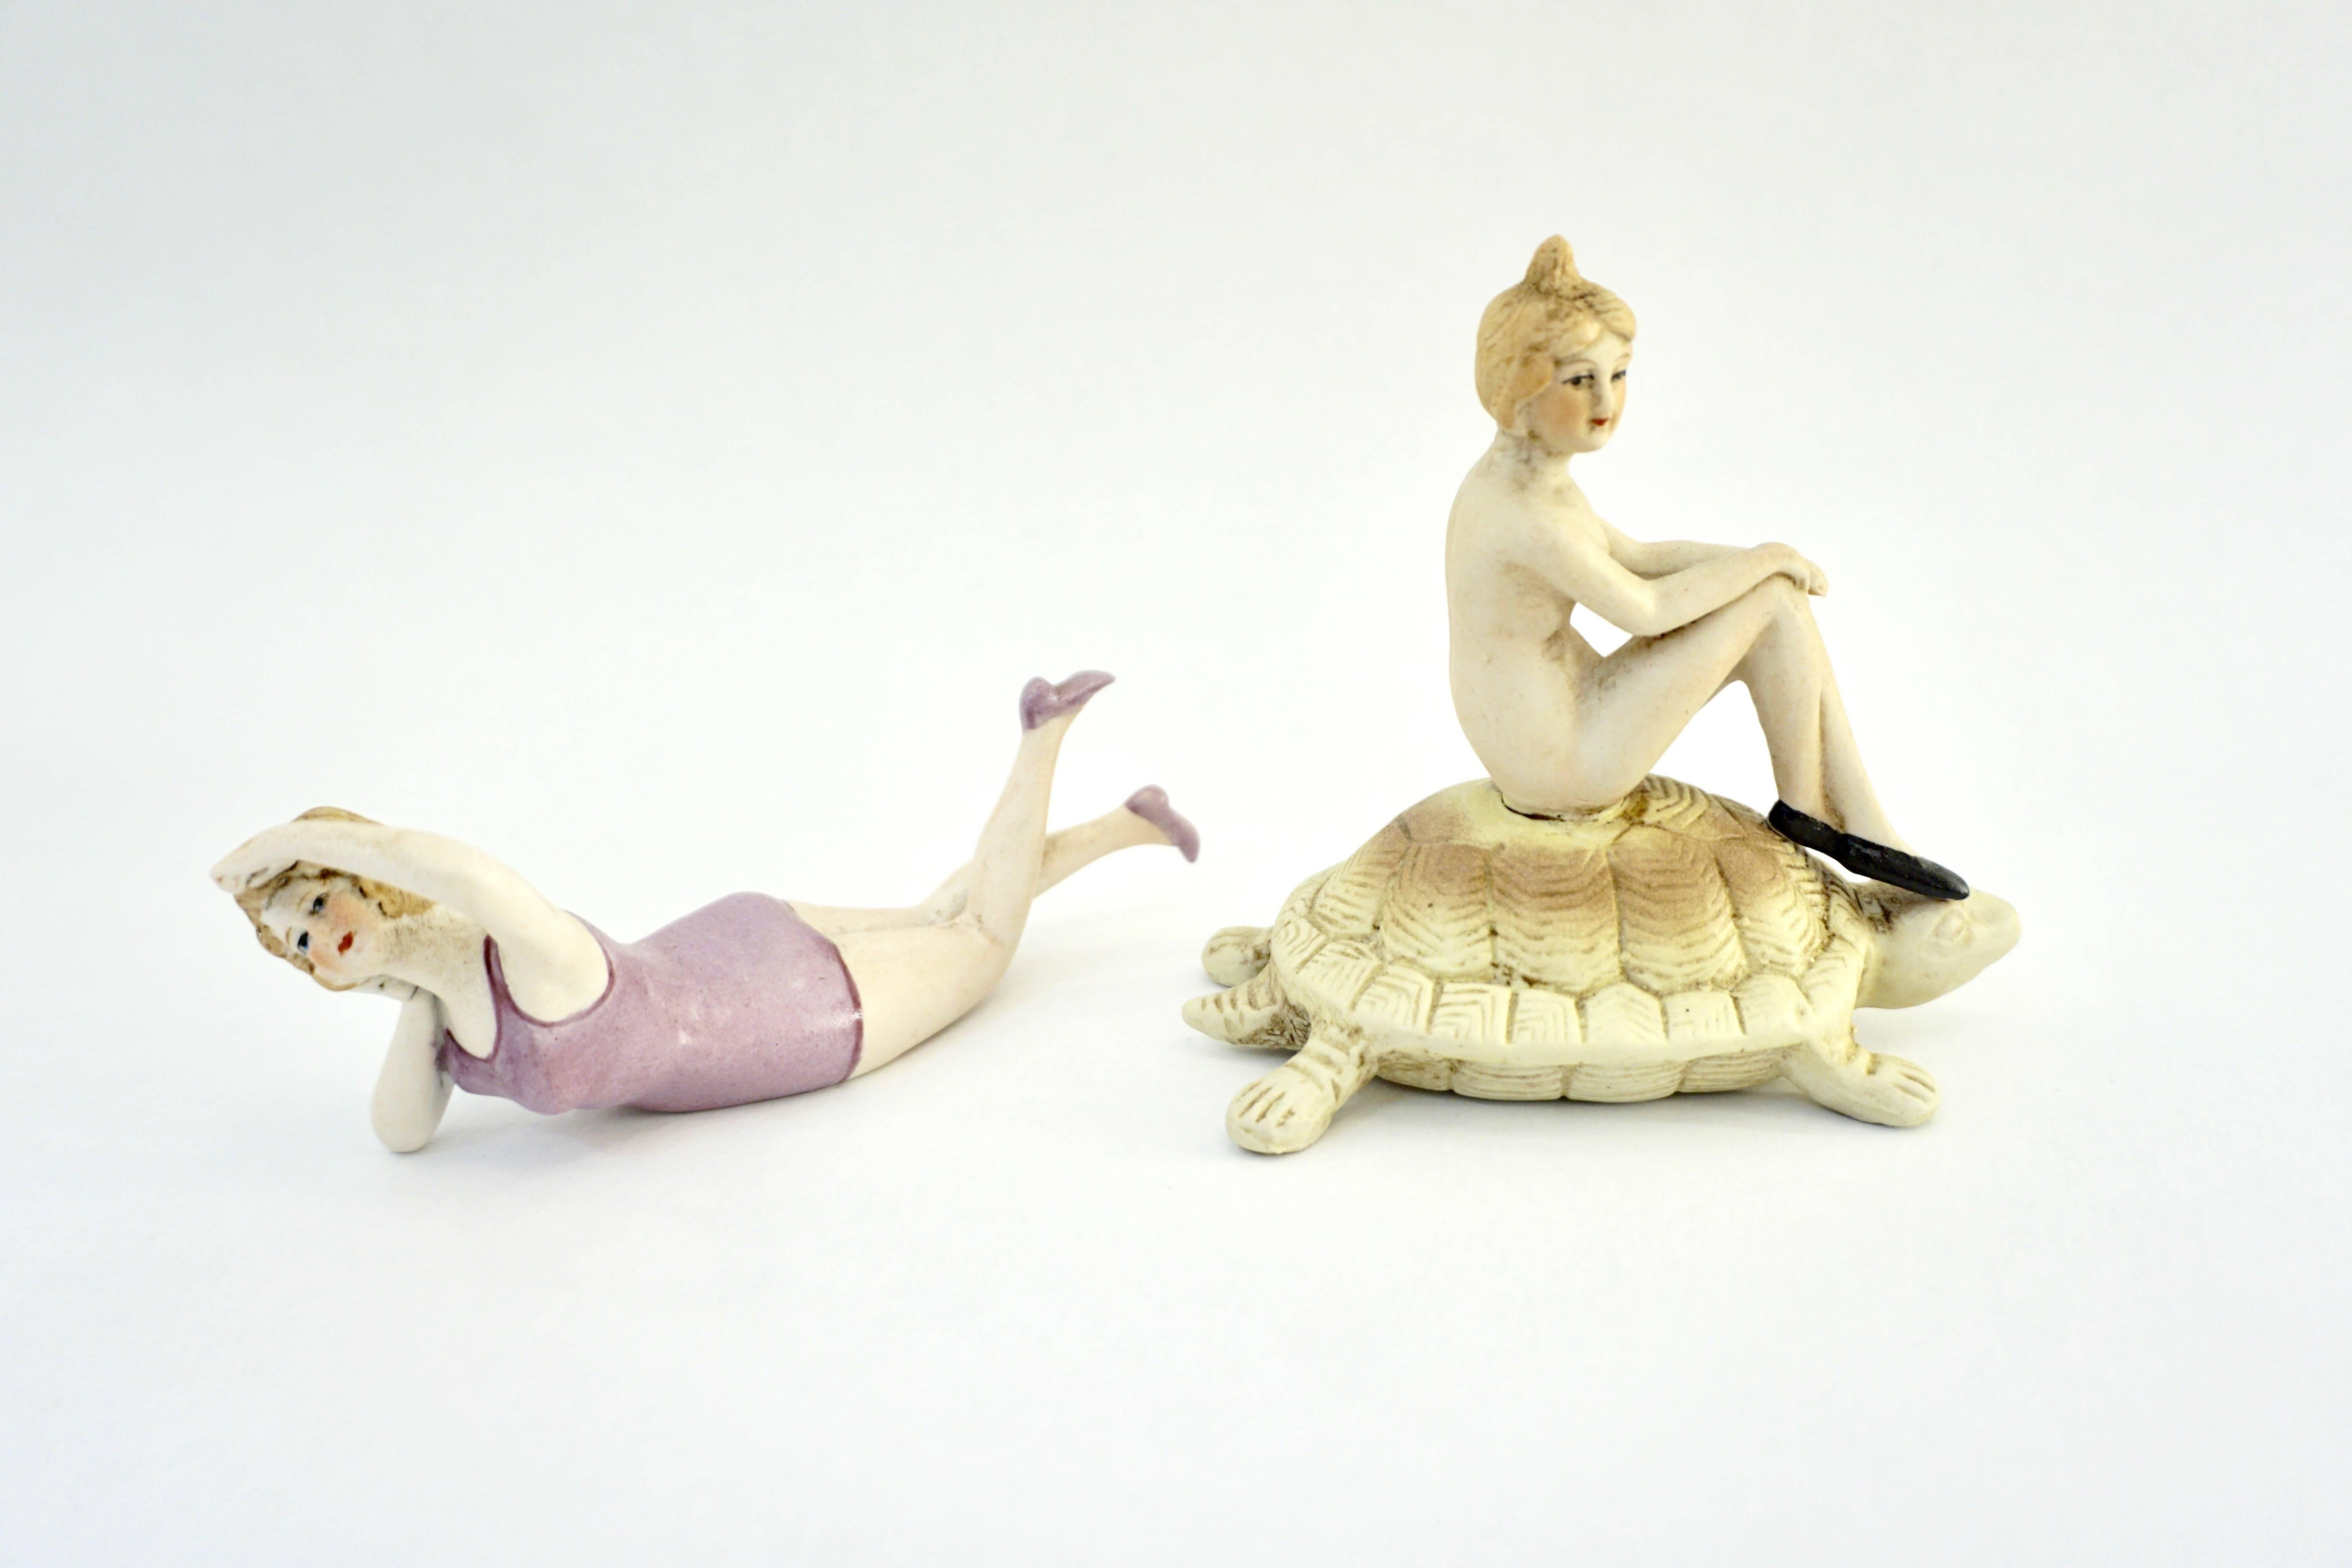 bathing suit figurines